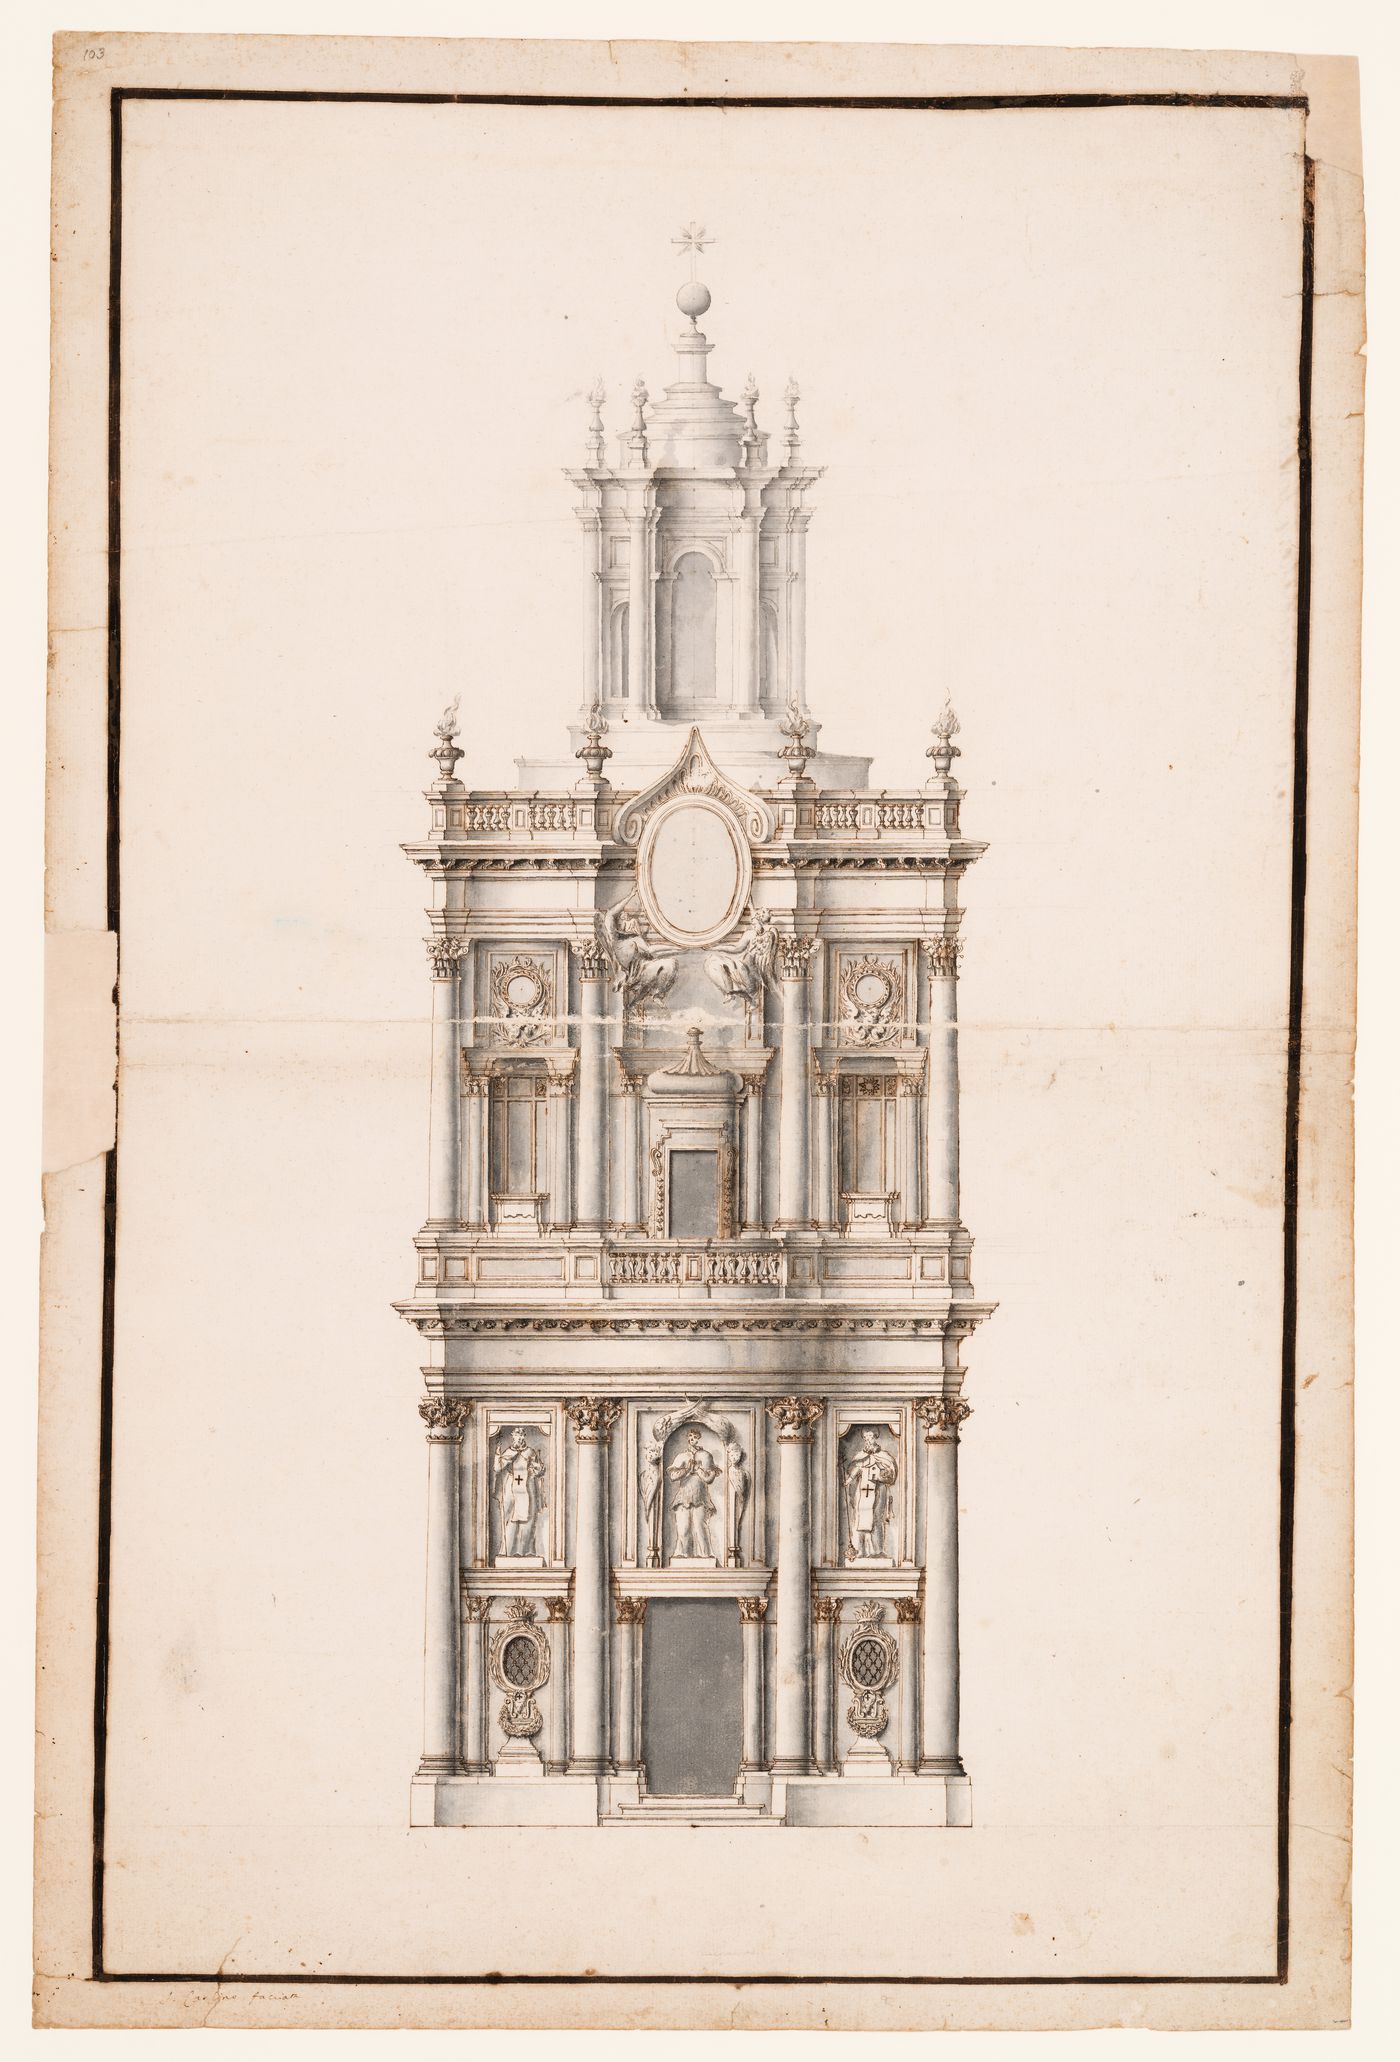 Elevation of the façade of S. Carlo alle Quattro Fontane, Rome